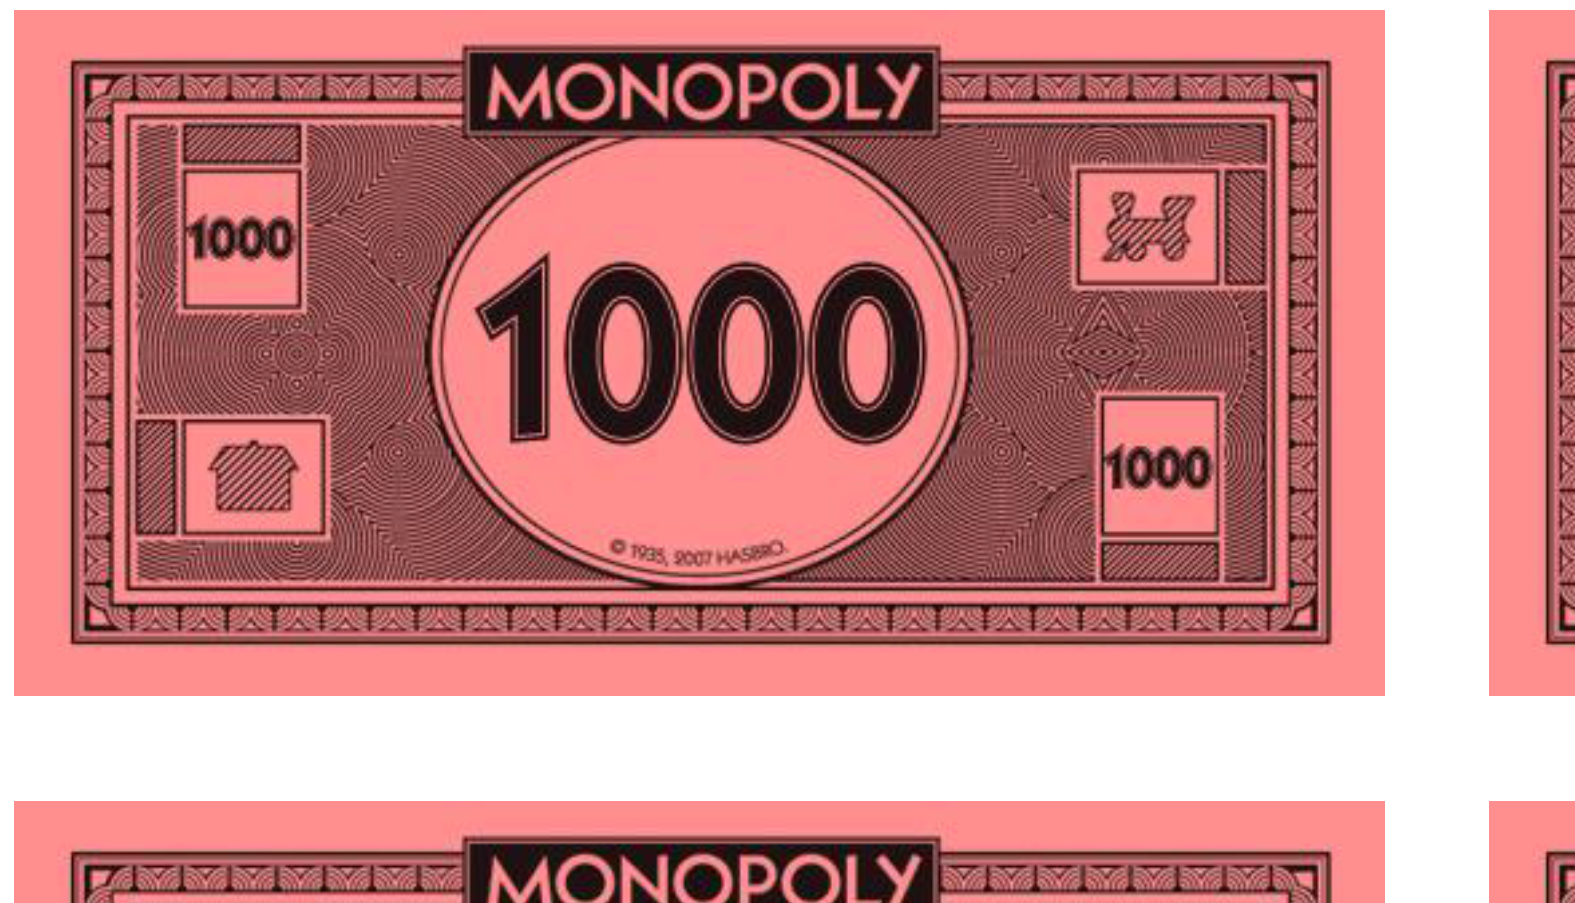 monopoly-money-1000-bill-templates-at-allbusinesstemplates